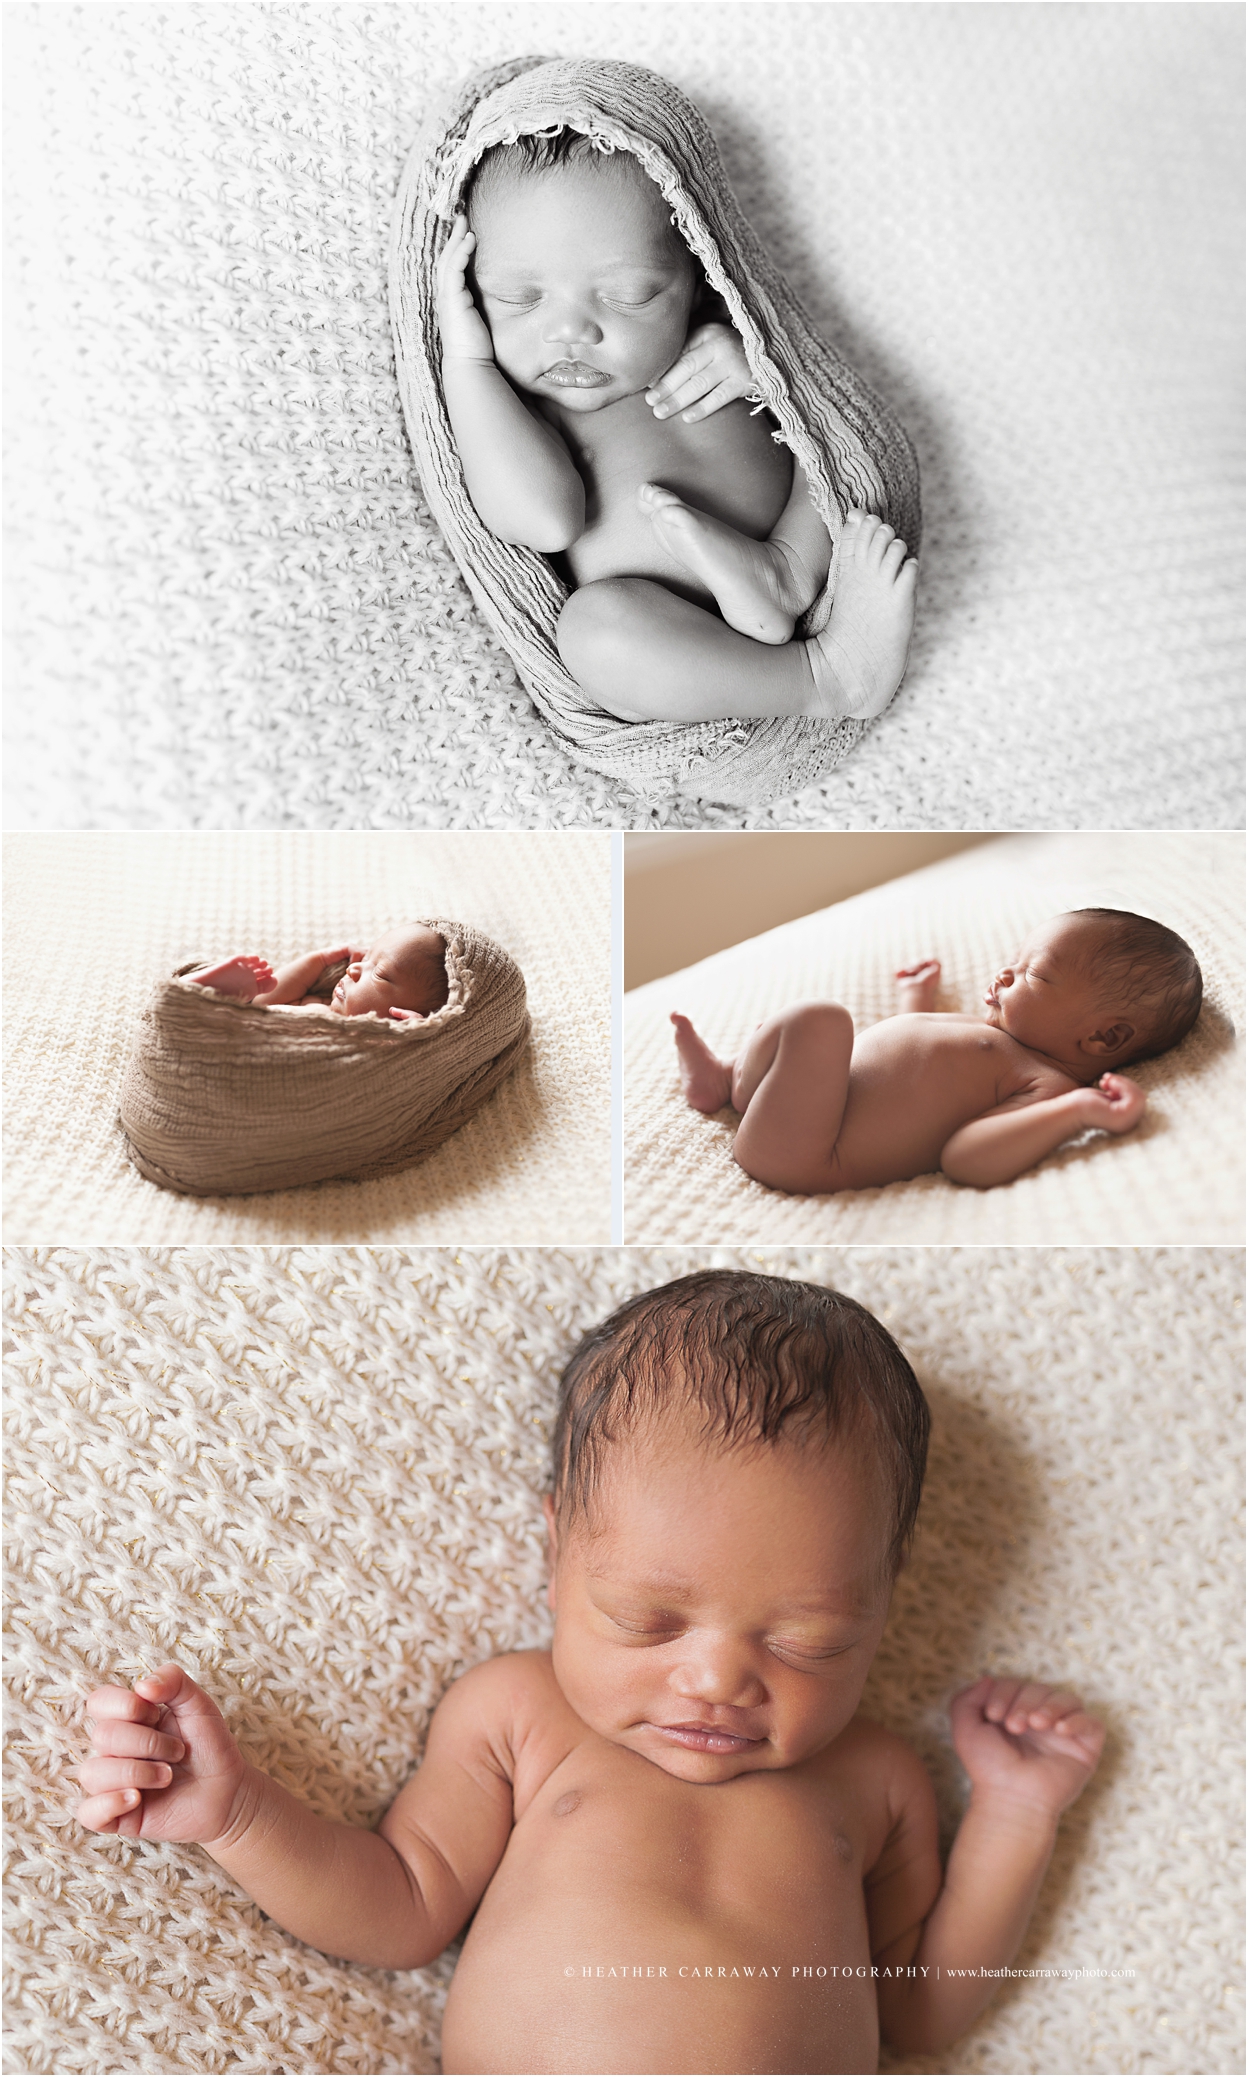 Heather Carraway Photography | Atlanta Newborn Photographer, Atlanta Newborn Baby Photography